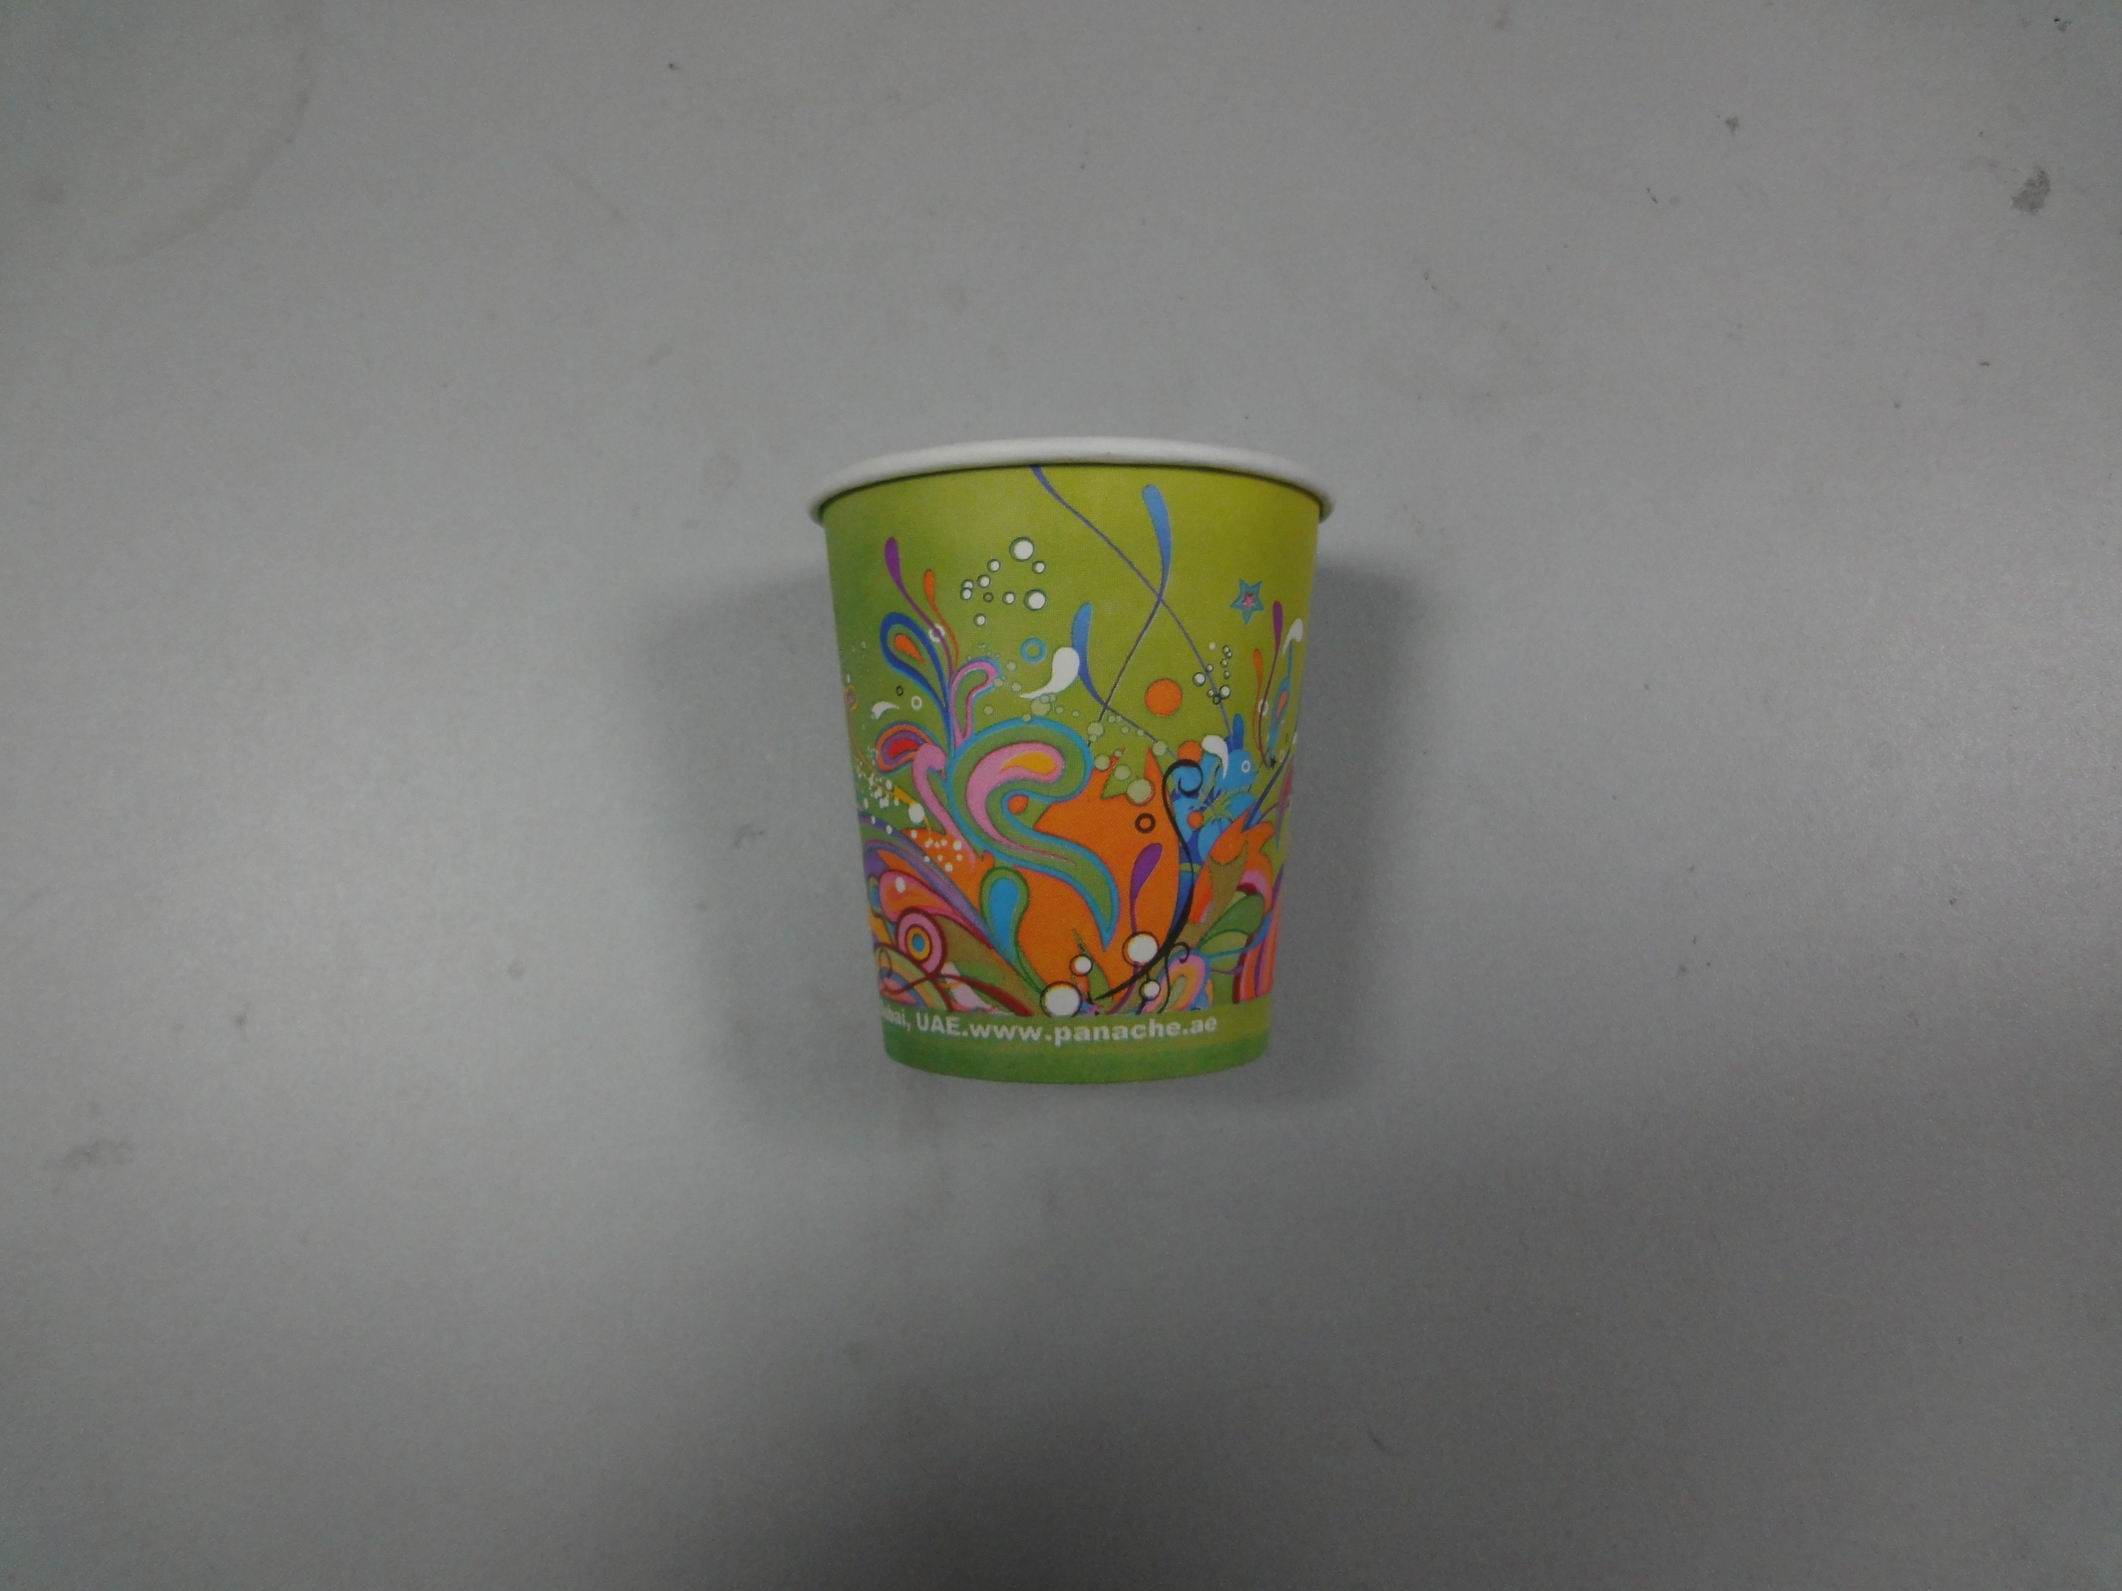 general drink cup(6oz)